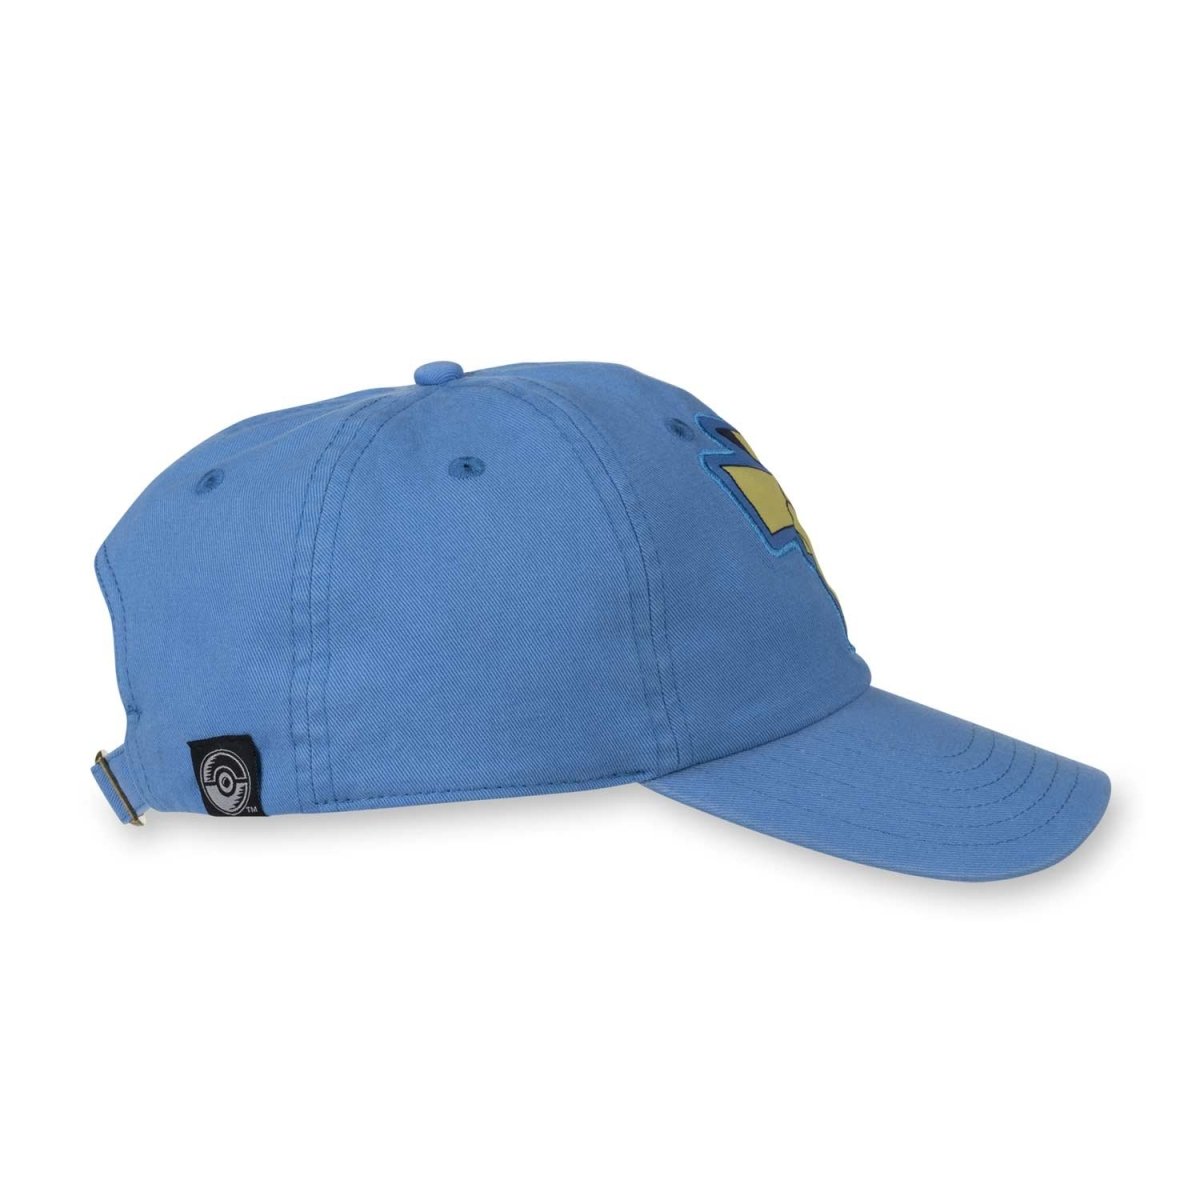 VALLEY HILL Pokemon Fishing Cap Blue Wear buy at